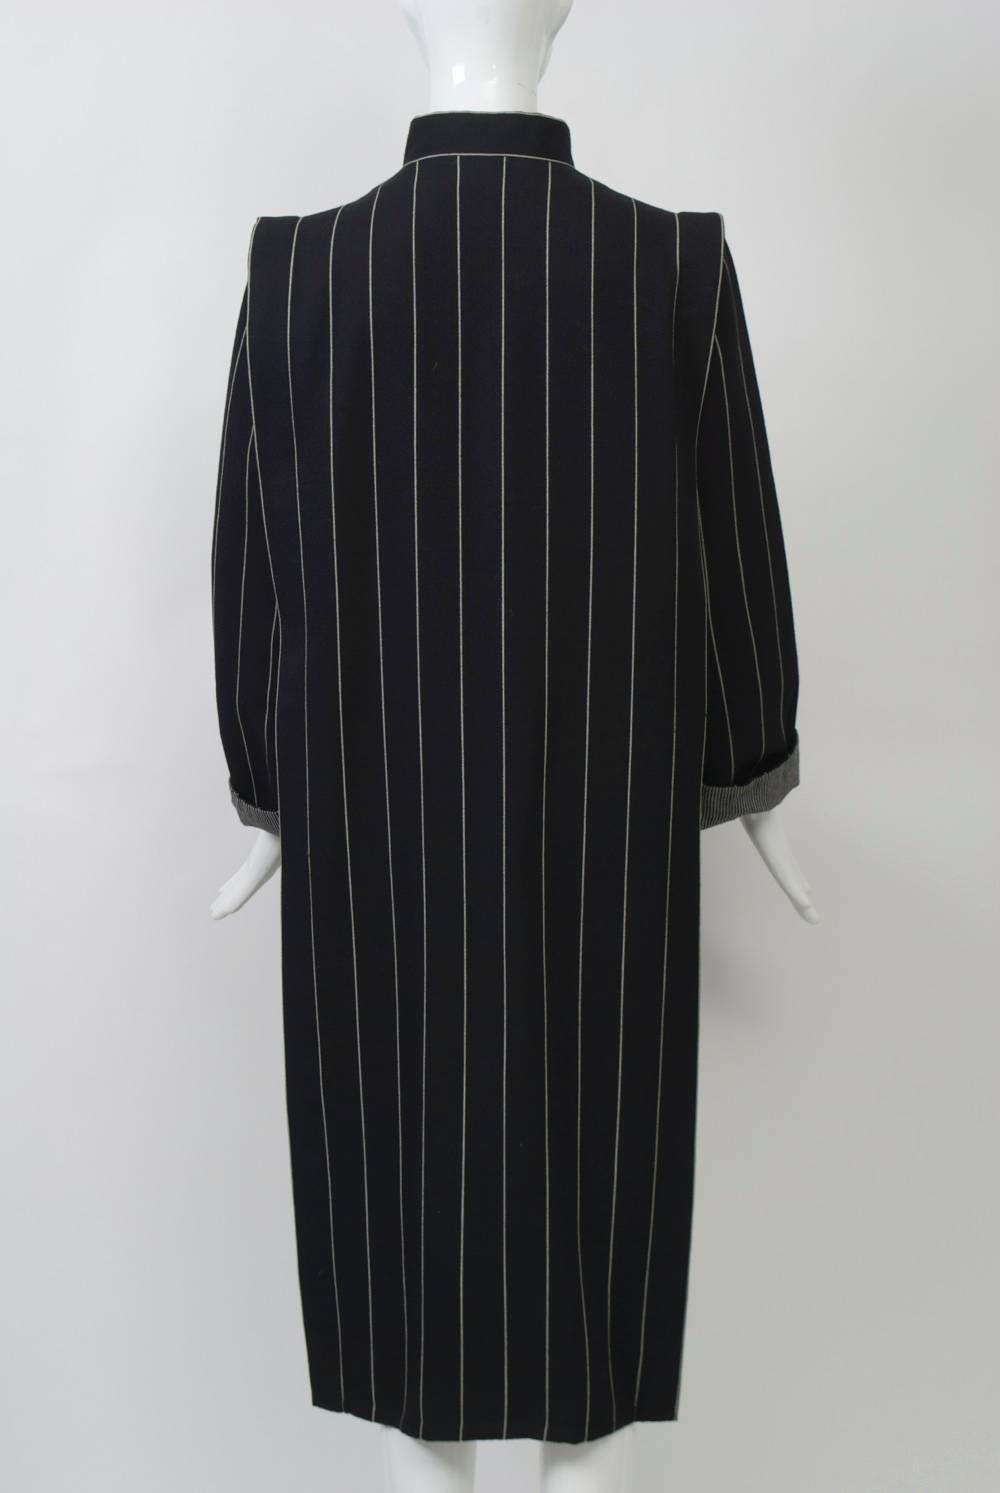 Trigere Black/White Striped 1980s Coat 1